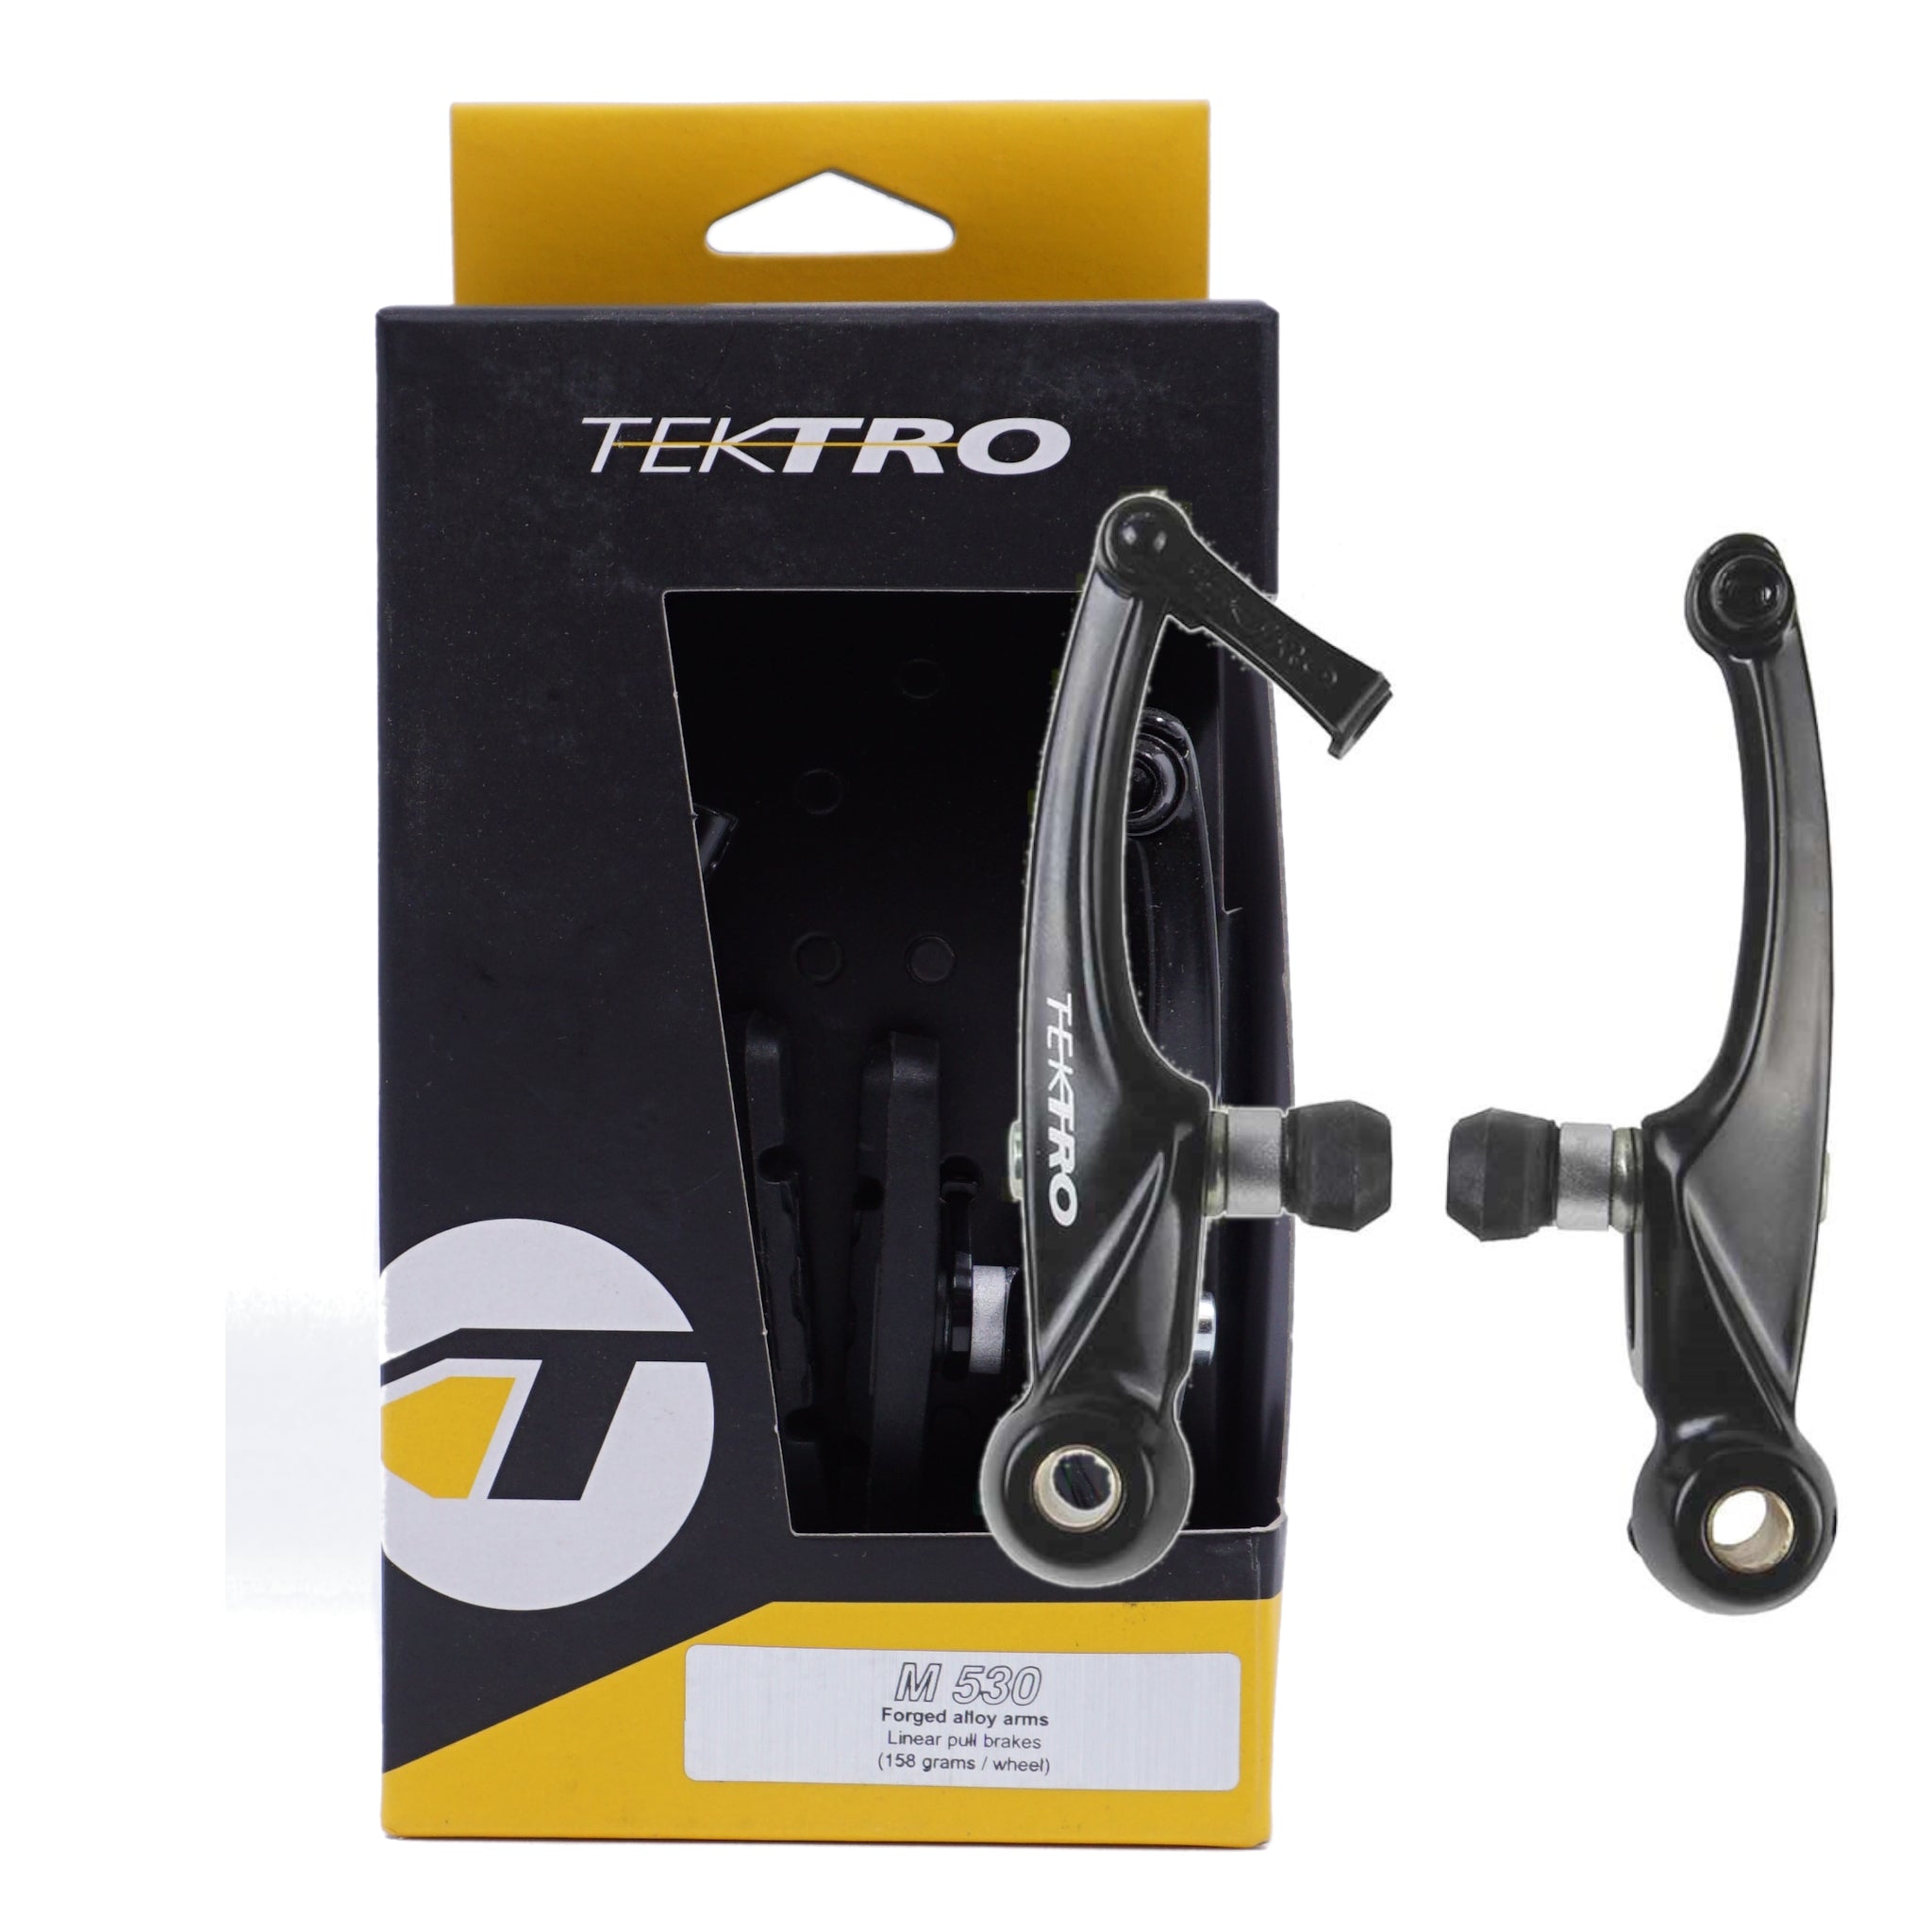 Tektro M530 Linear Pull V-Brake - The Bikesmiths